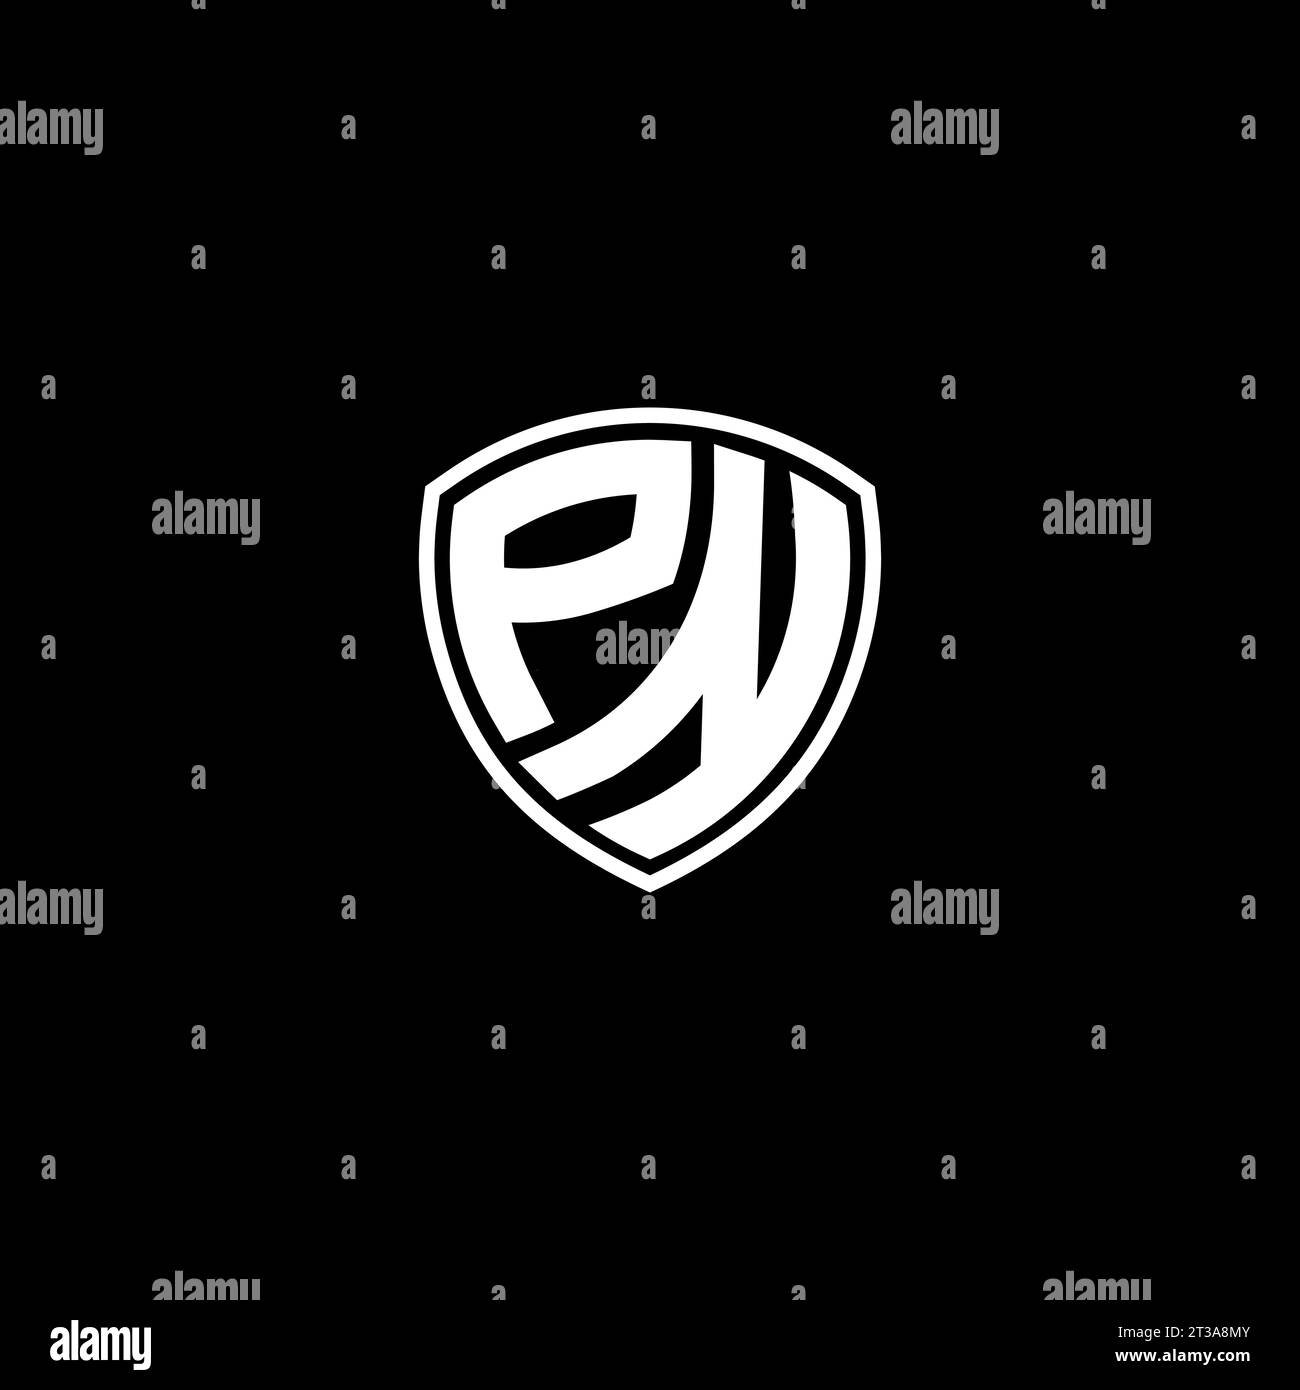 PN logo monogram emblem style with shield shape design template ideas Stock Vector